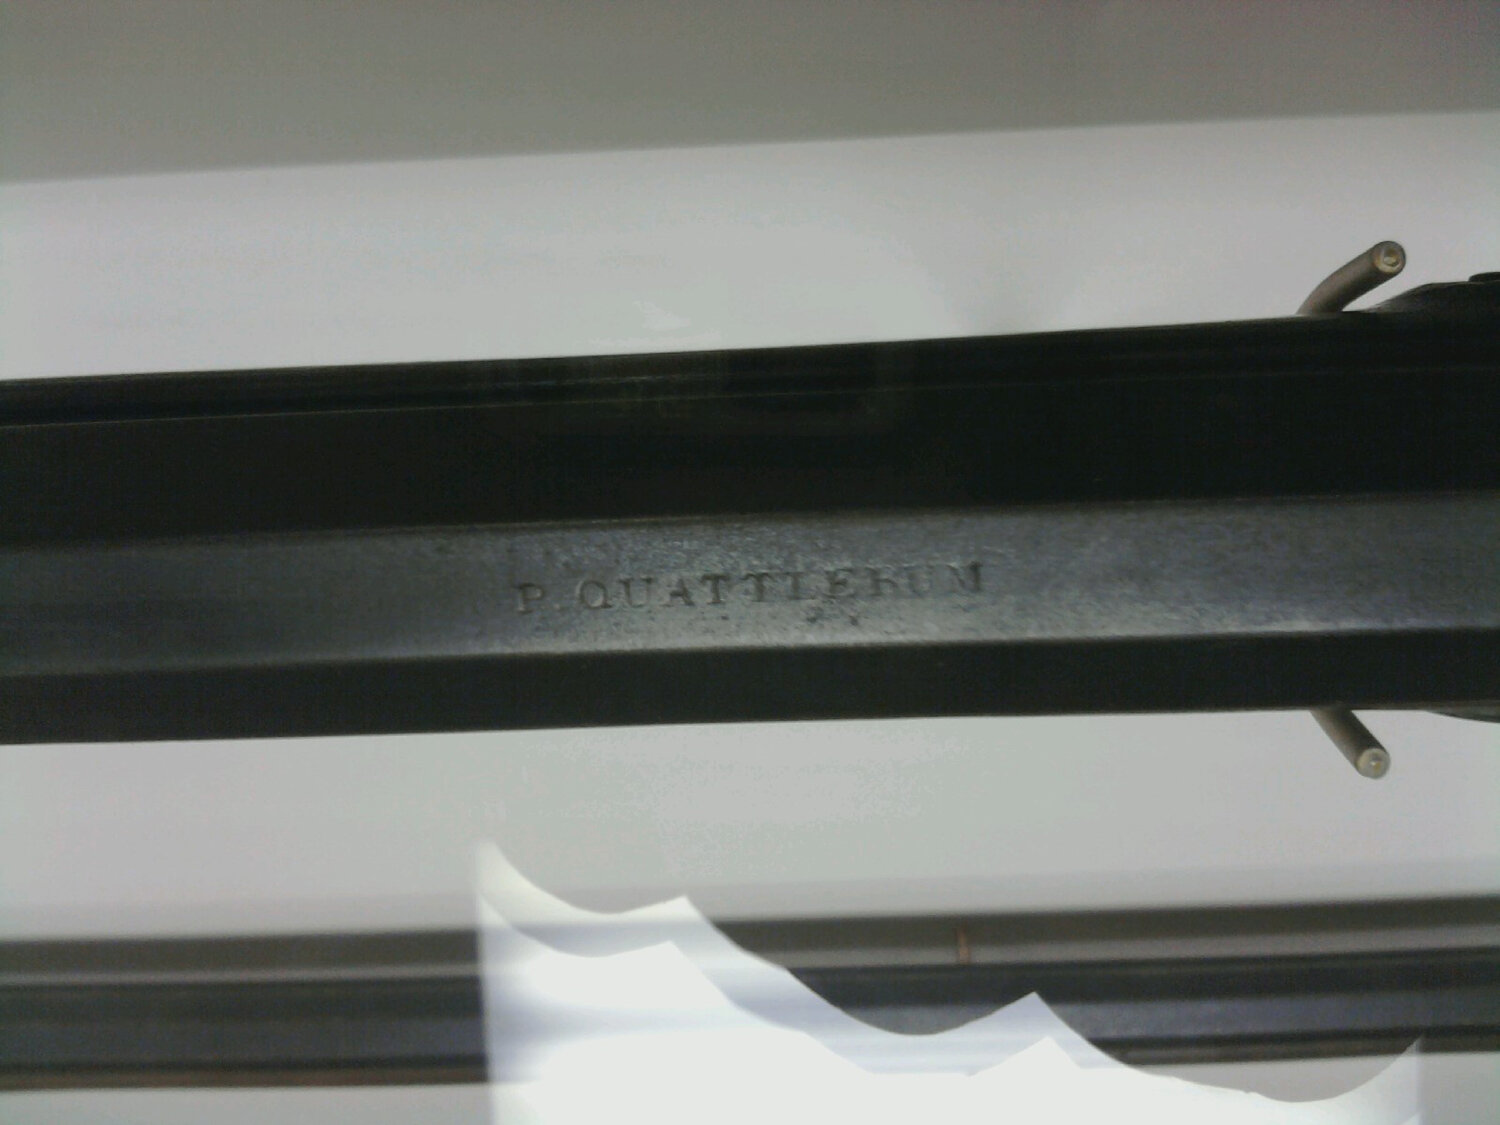 Quattlebaum signature on a rifle